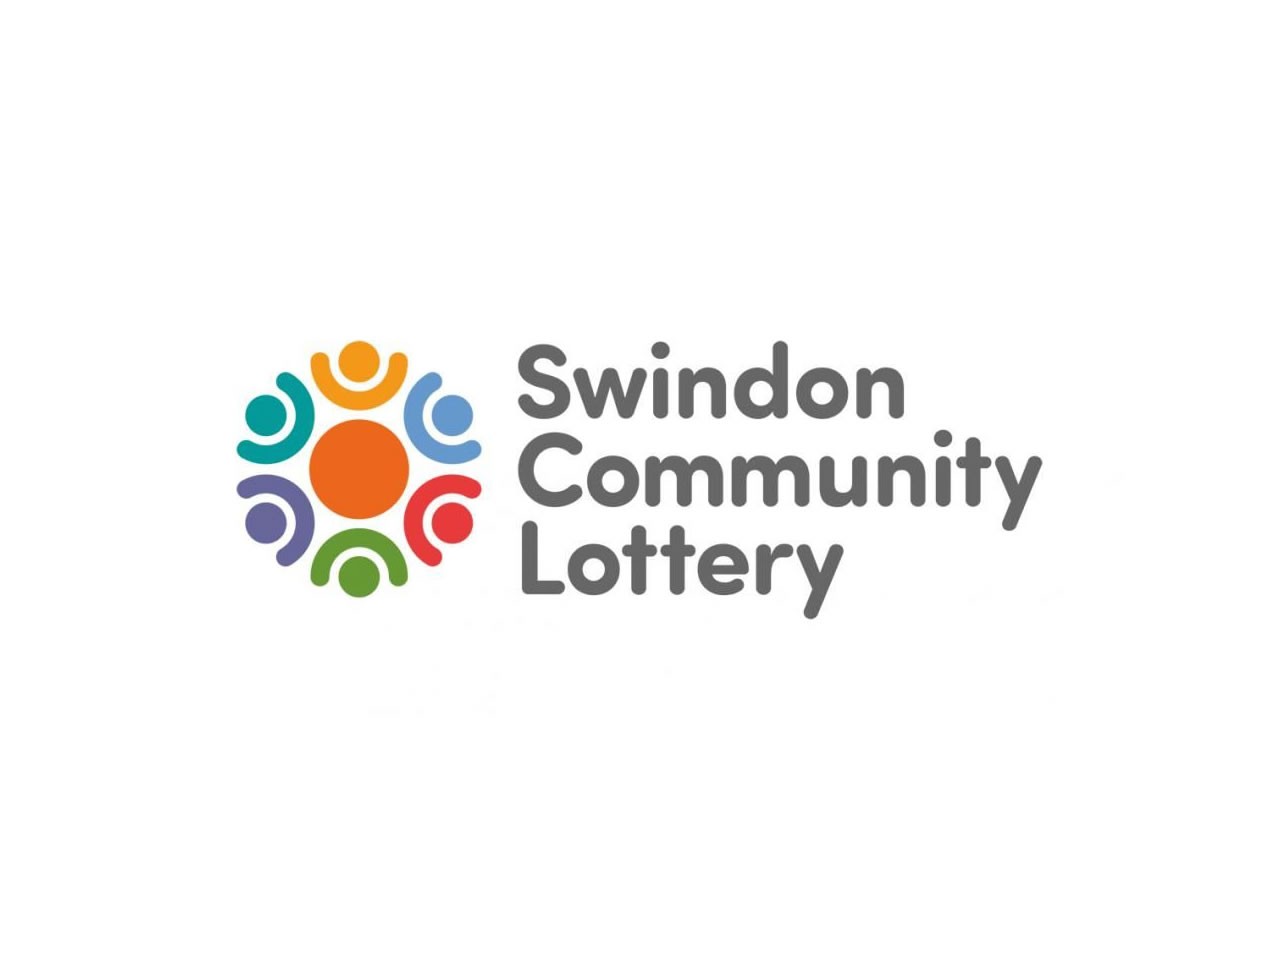 Swindon Community Lottery